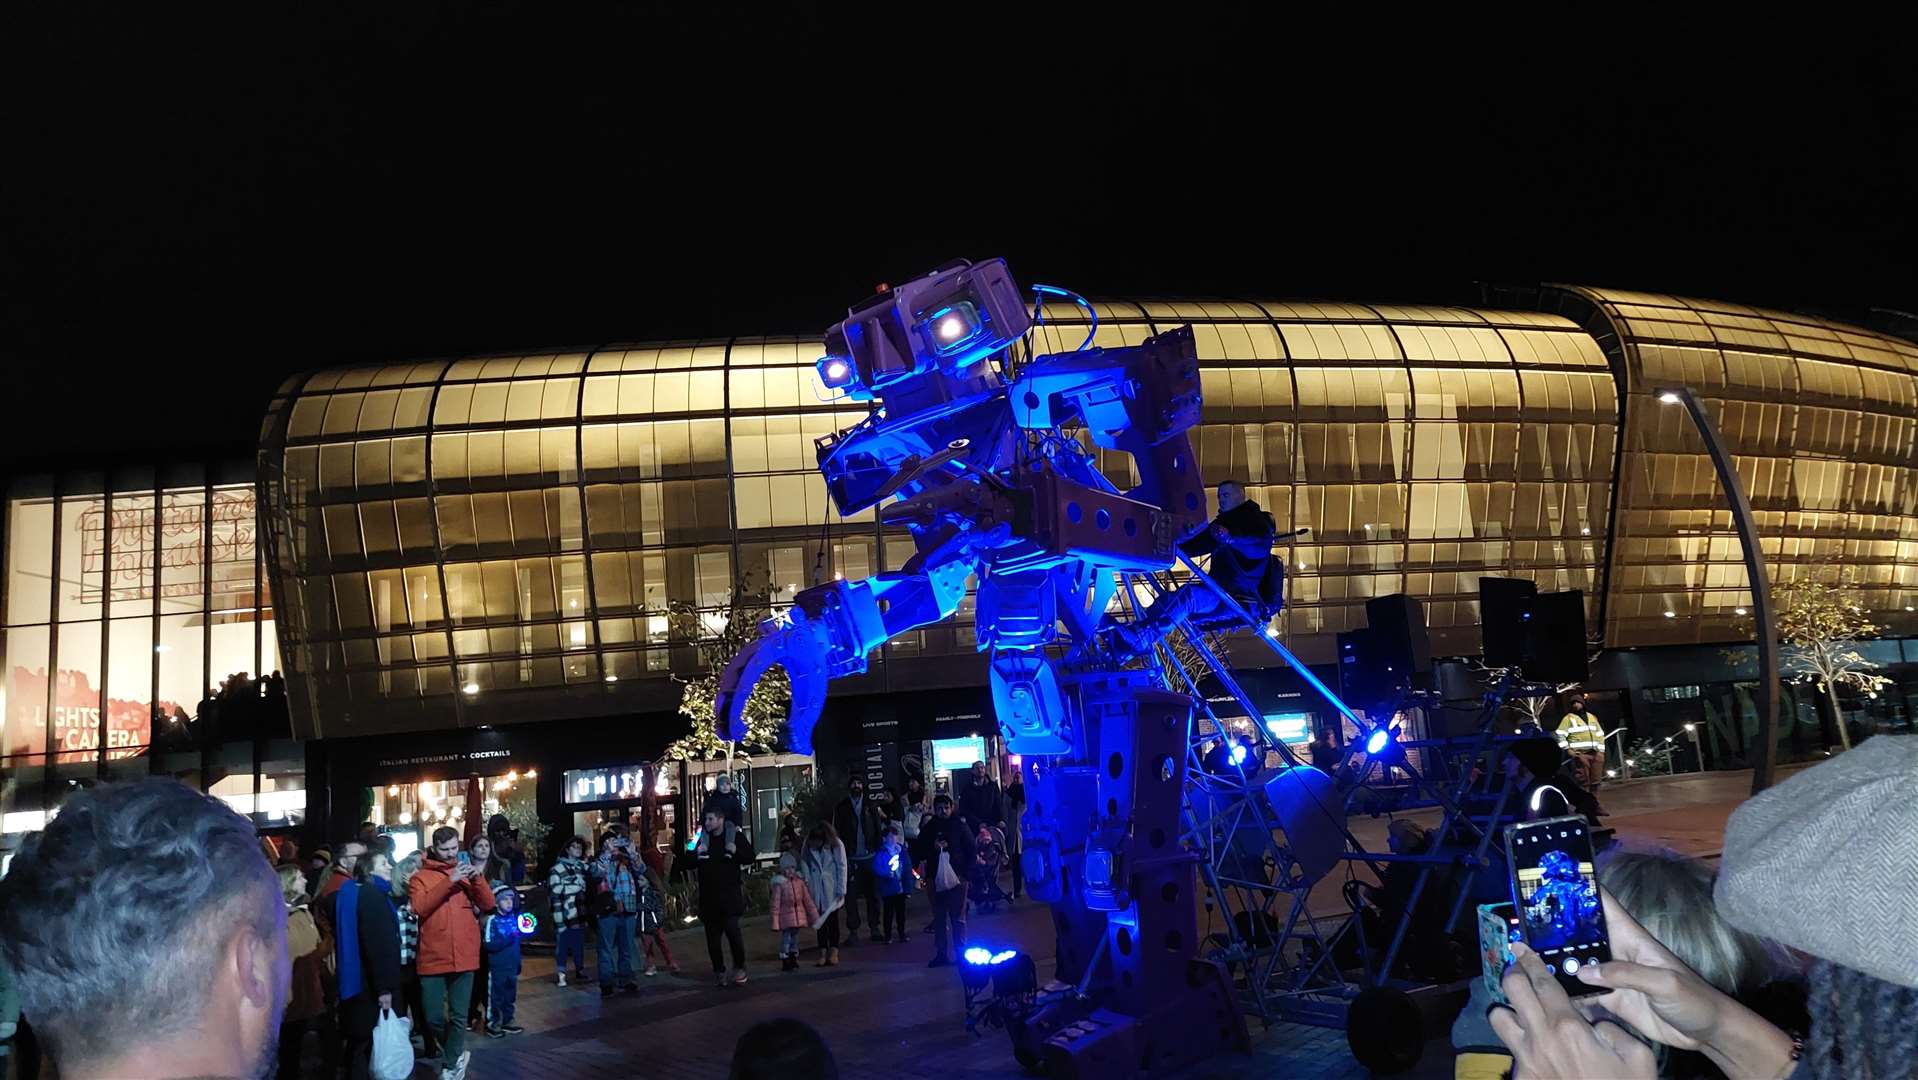 BinBot the giant robot puppet